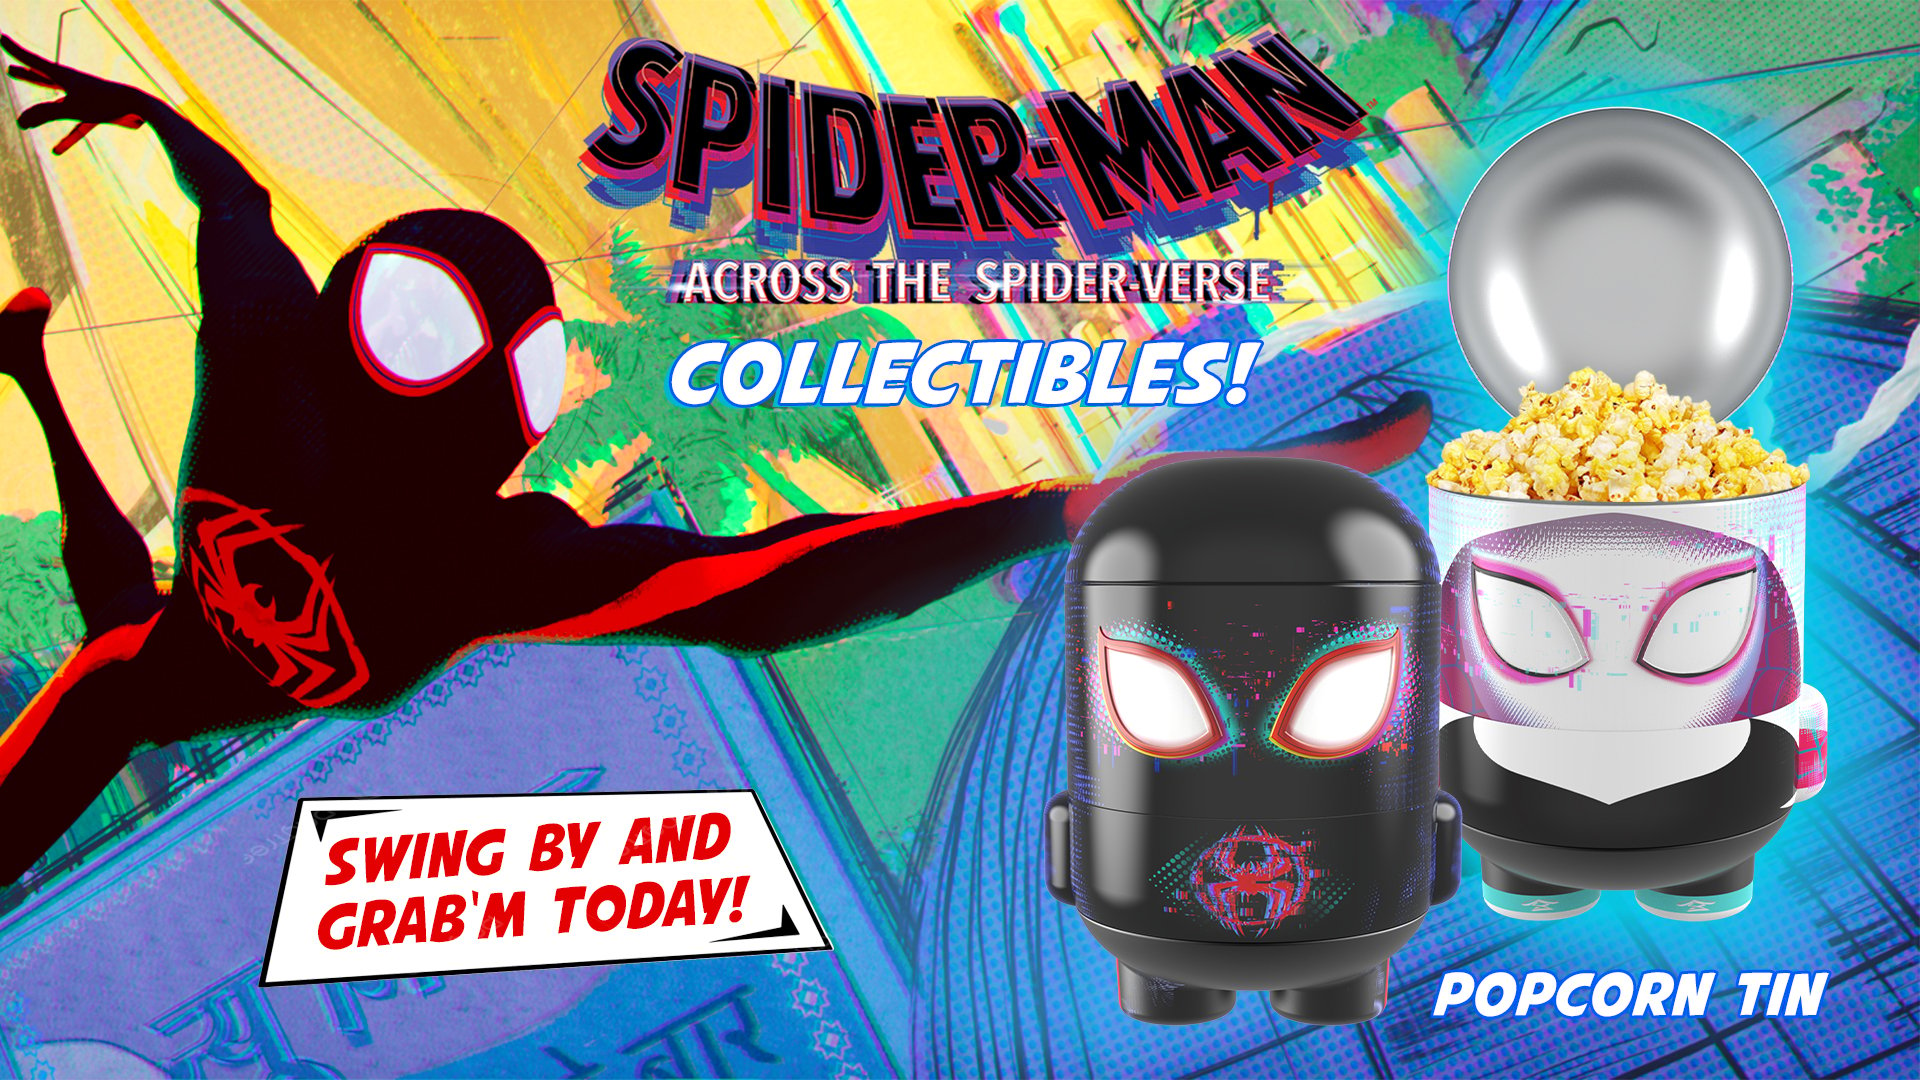 Spider-Man Collectible